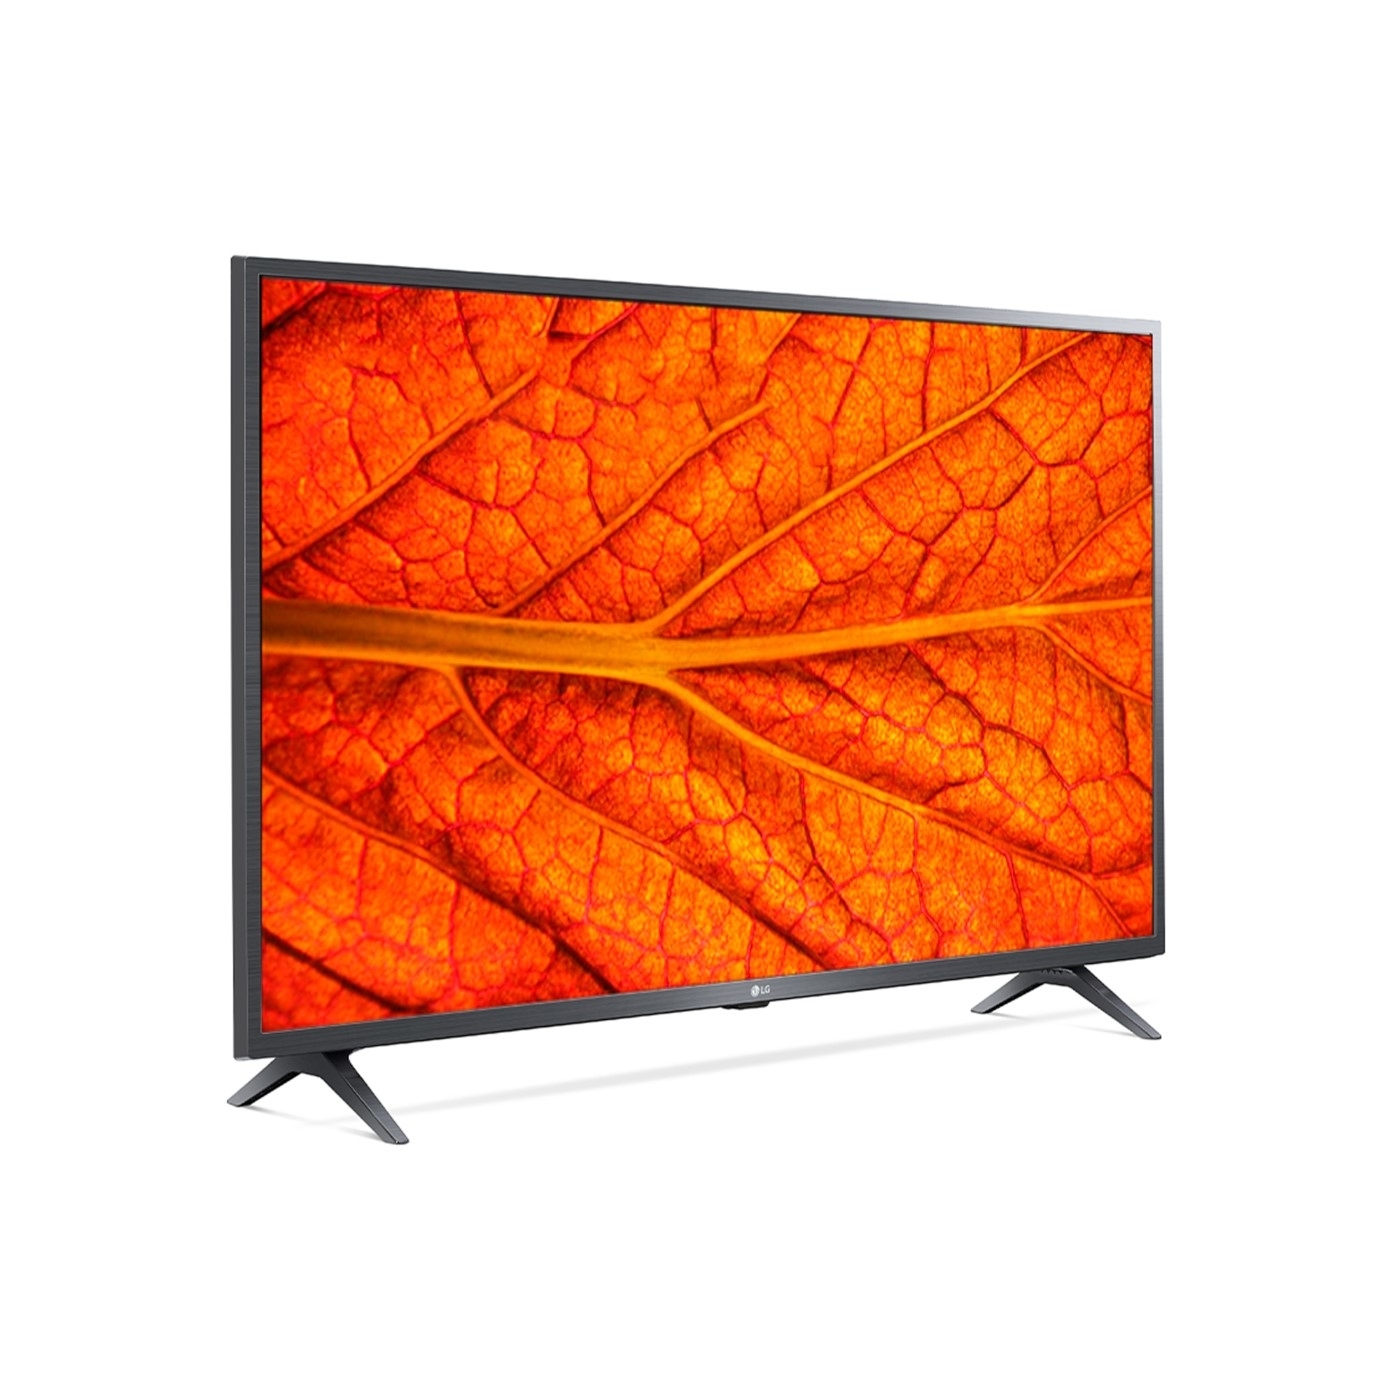 TV LG 32 HD LED Plano Smart TV - BG Inversiones